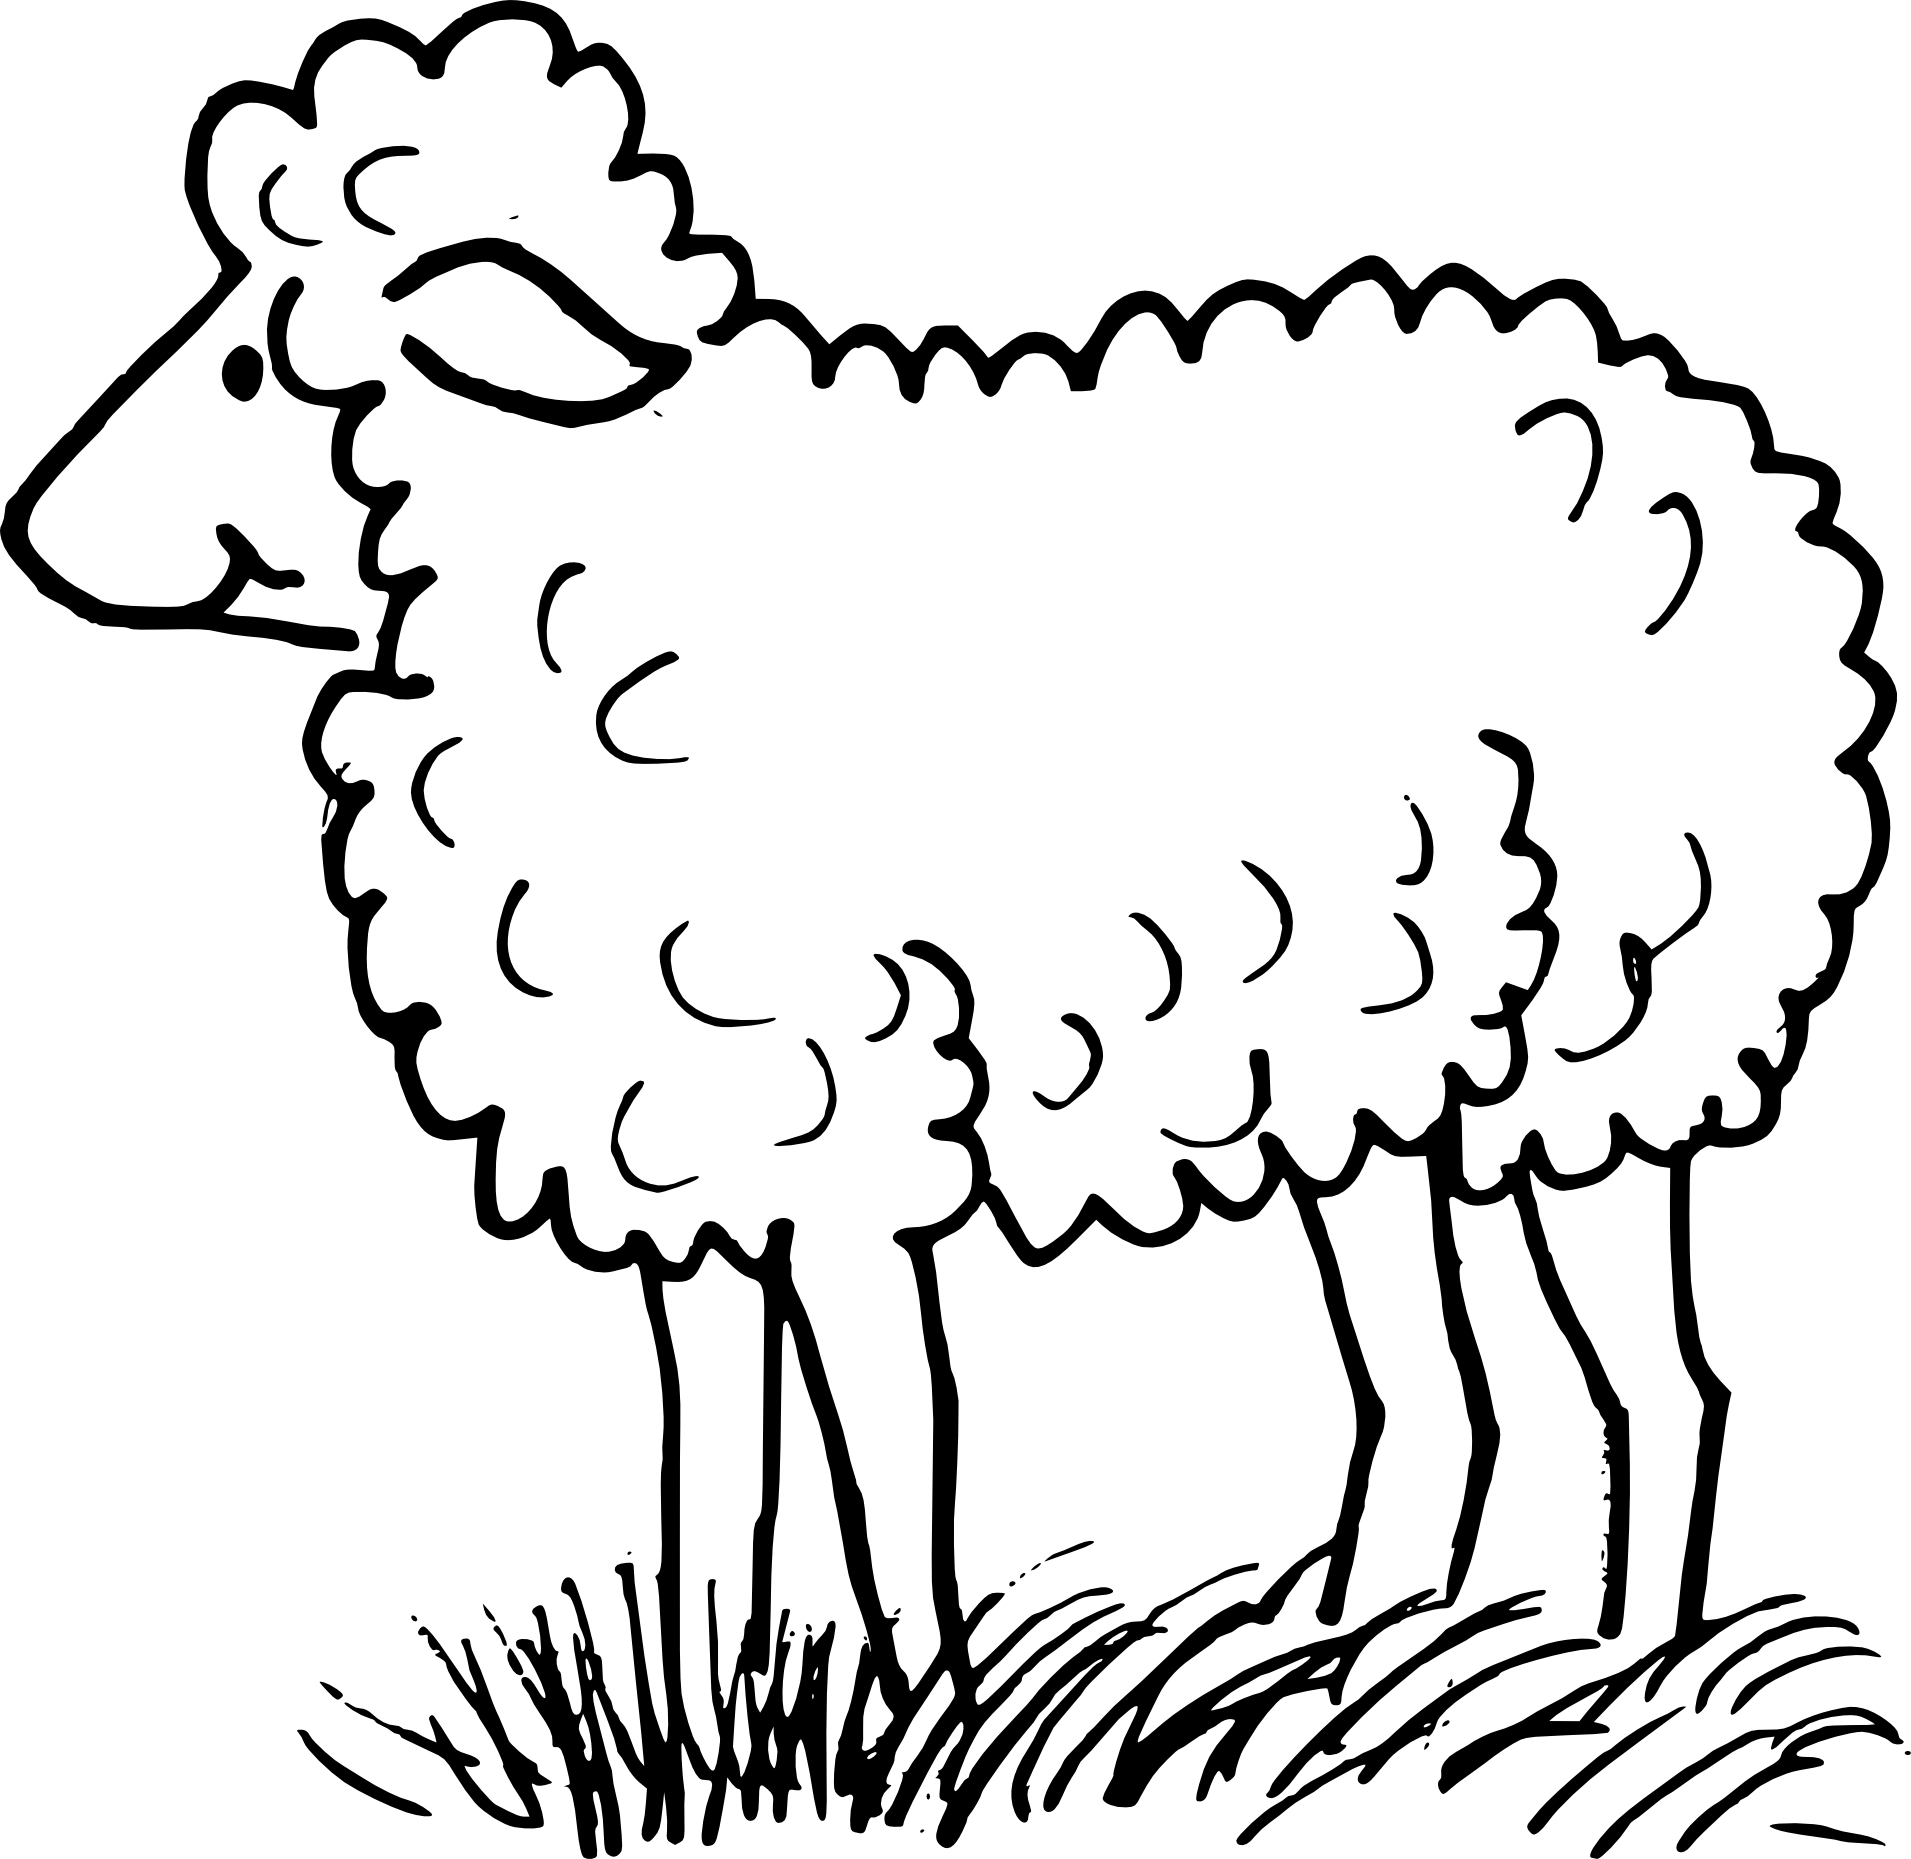 Sheep drawing and coloring page 2